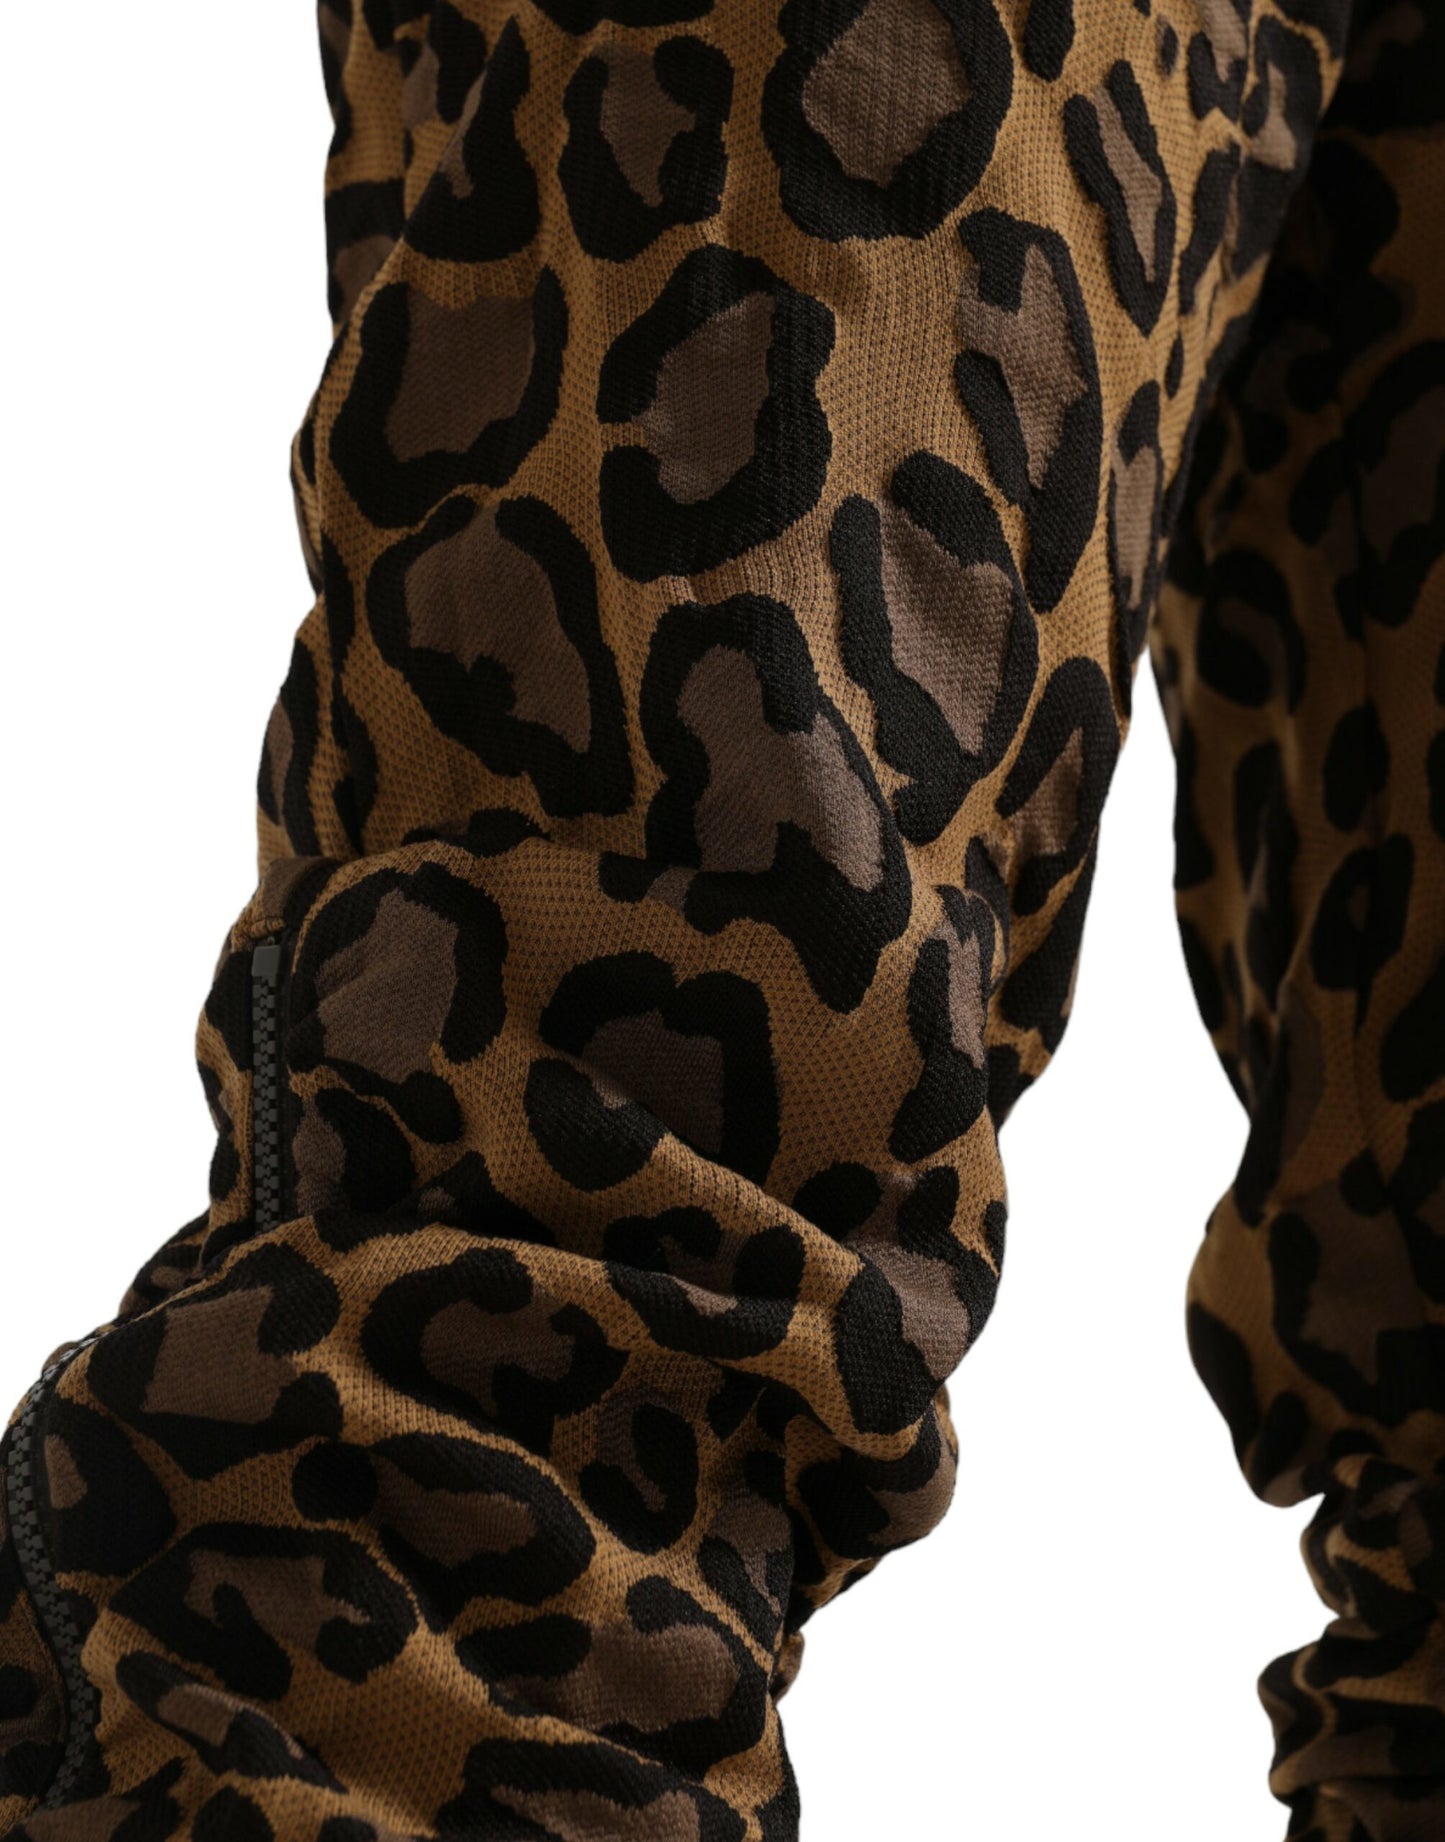 Chic Leopard Print Jogger Pants